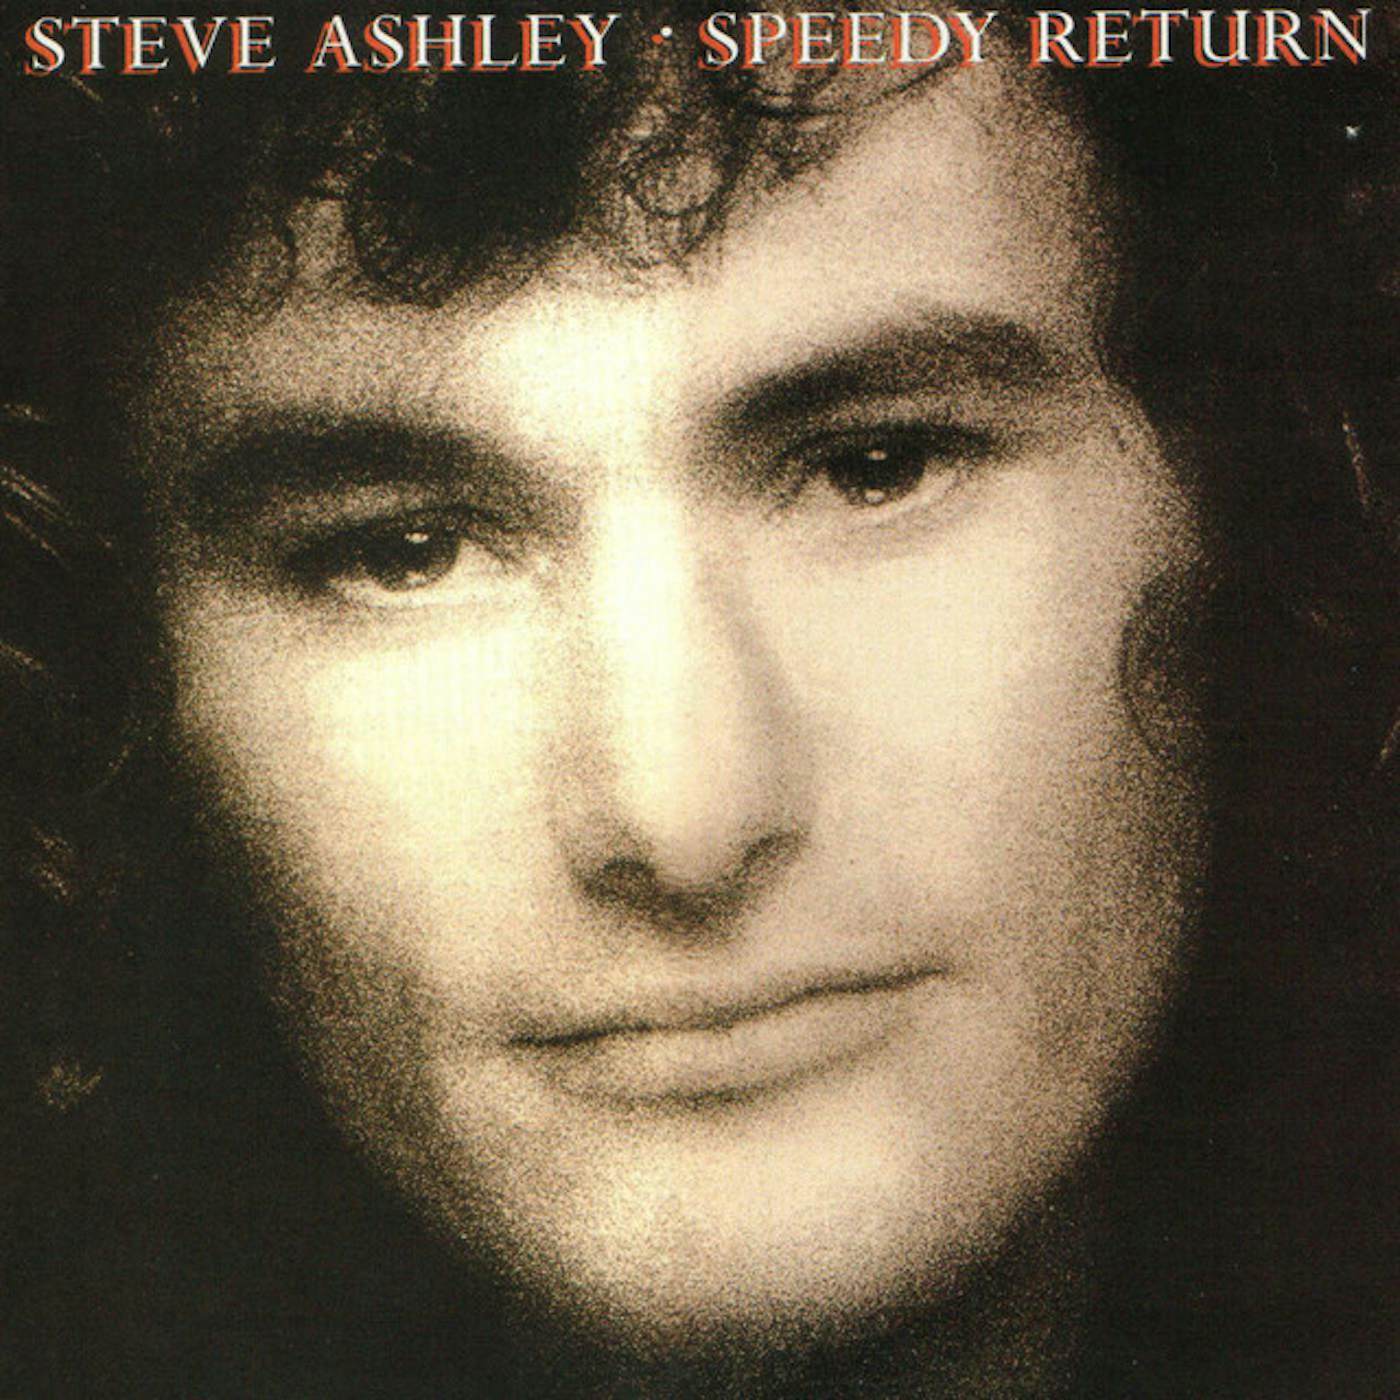 Steve Ashley SPEEDY RETURN CD